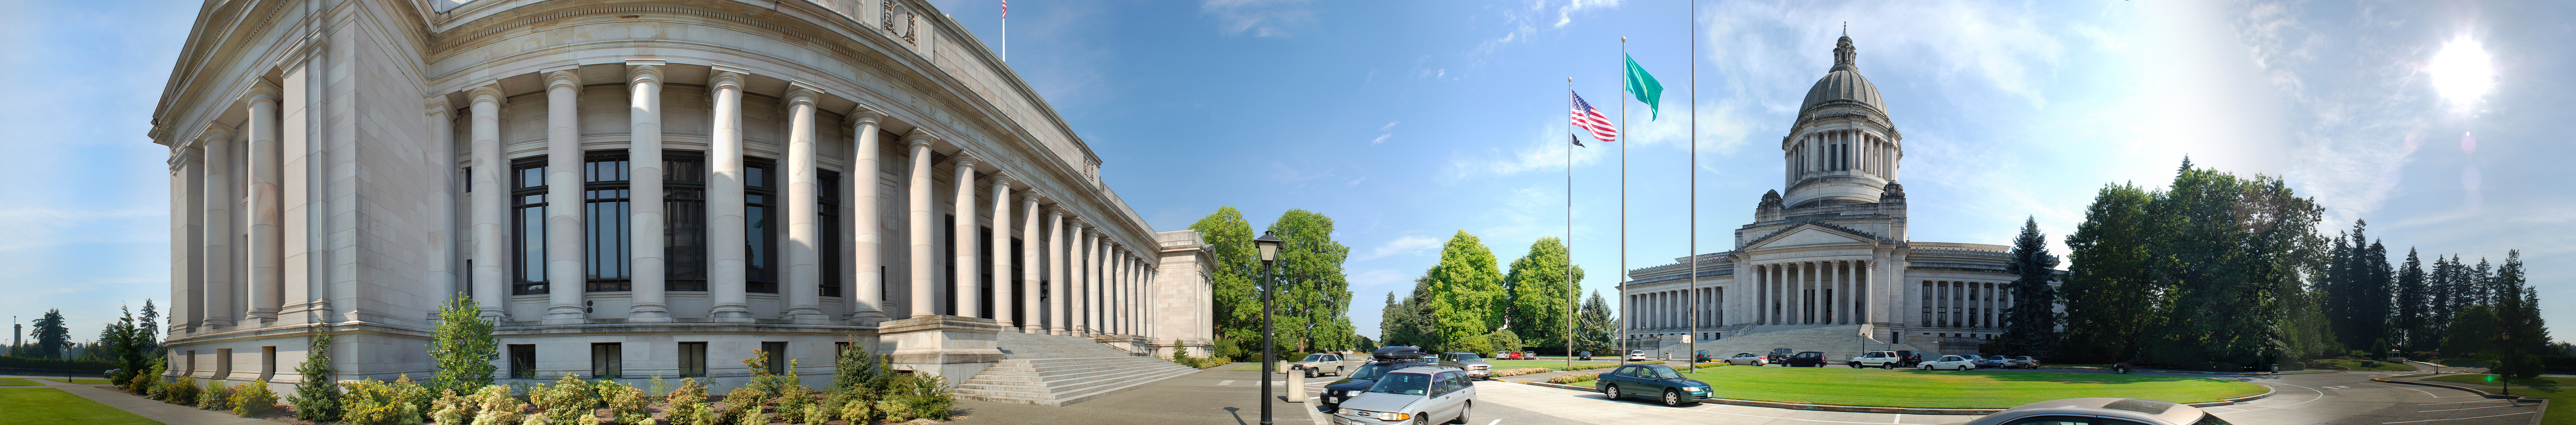 Washington_State_Capitol_Panorama